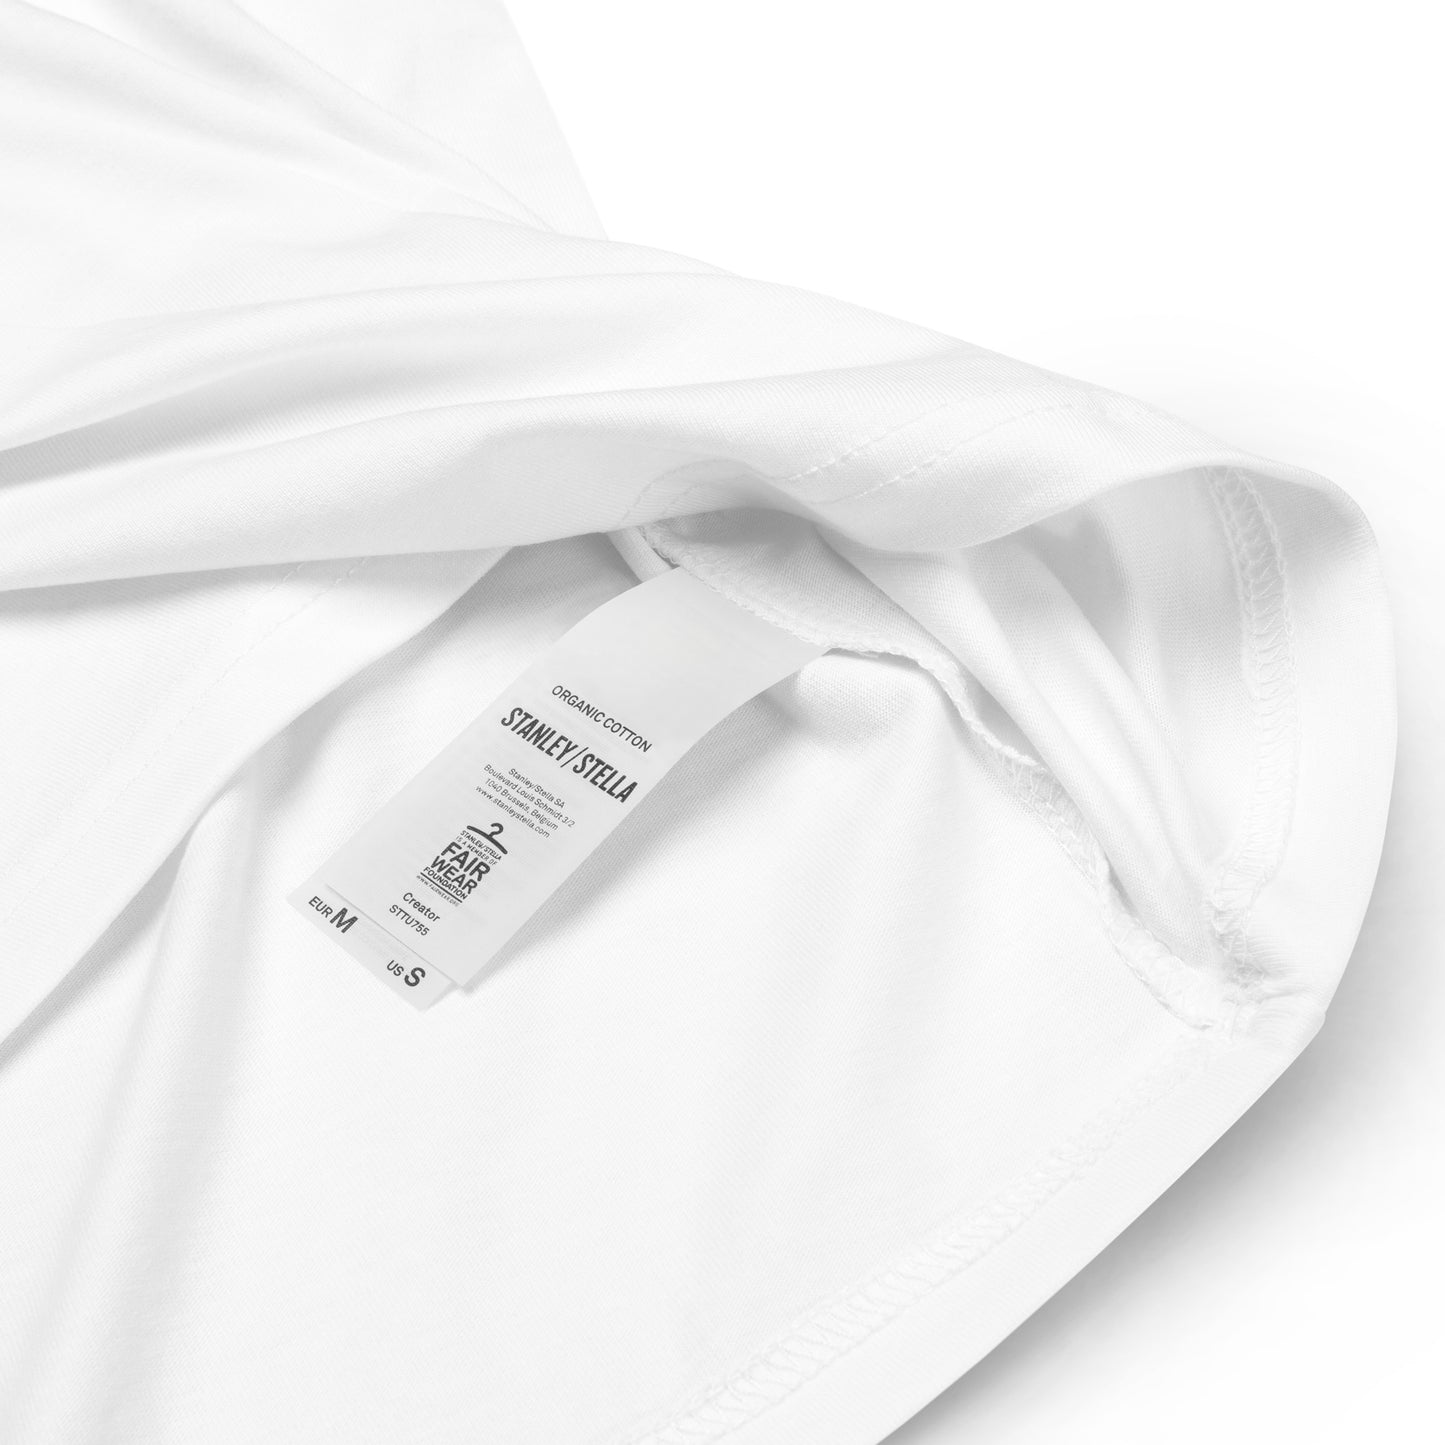 Having A Ball - Unisex Cotton T-Shirt (Black Logo)